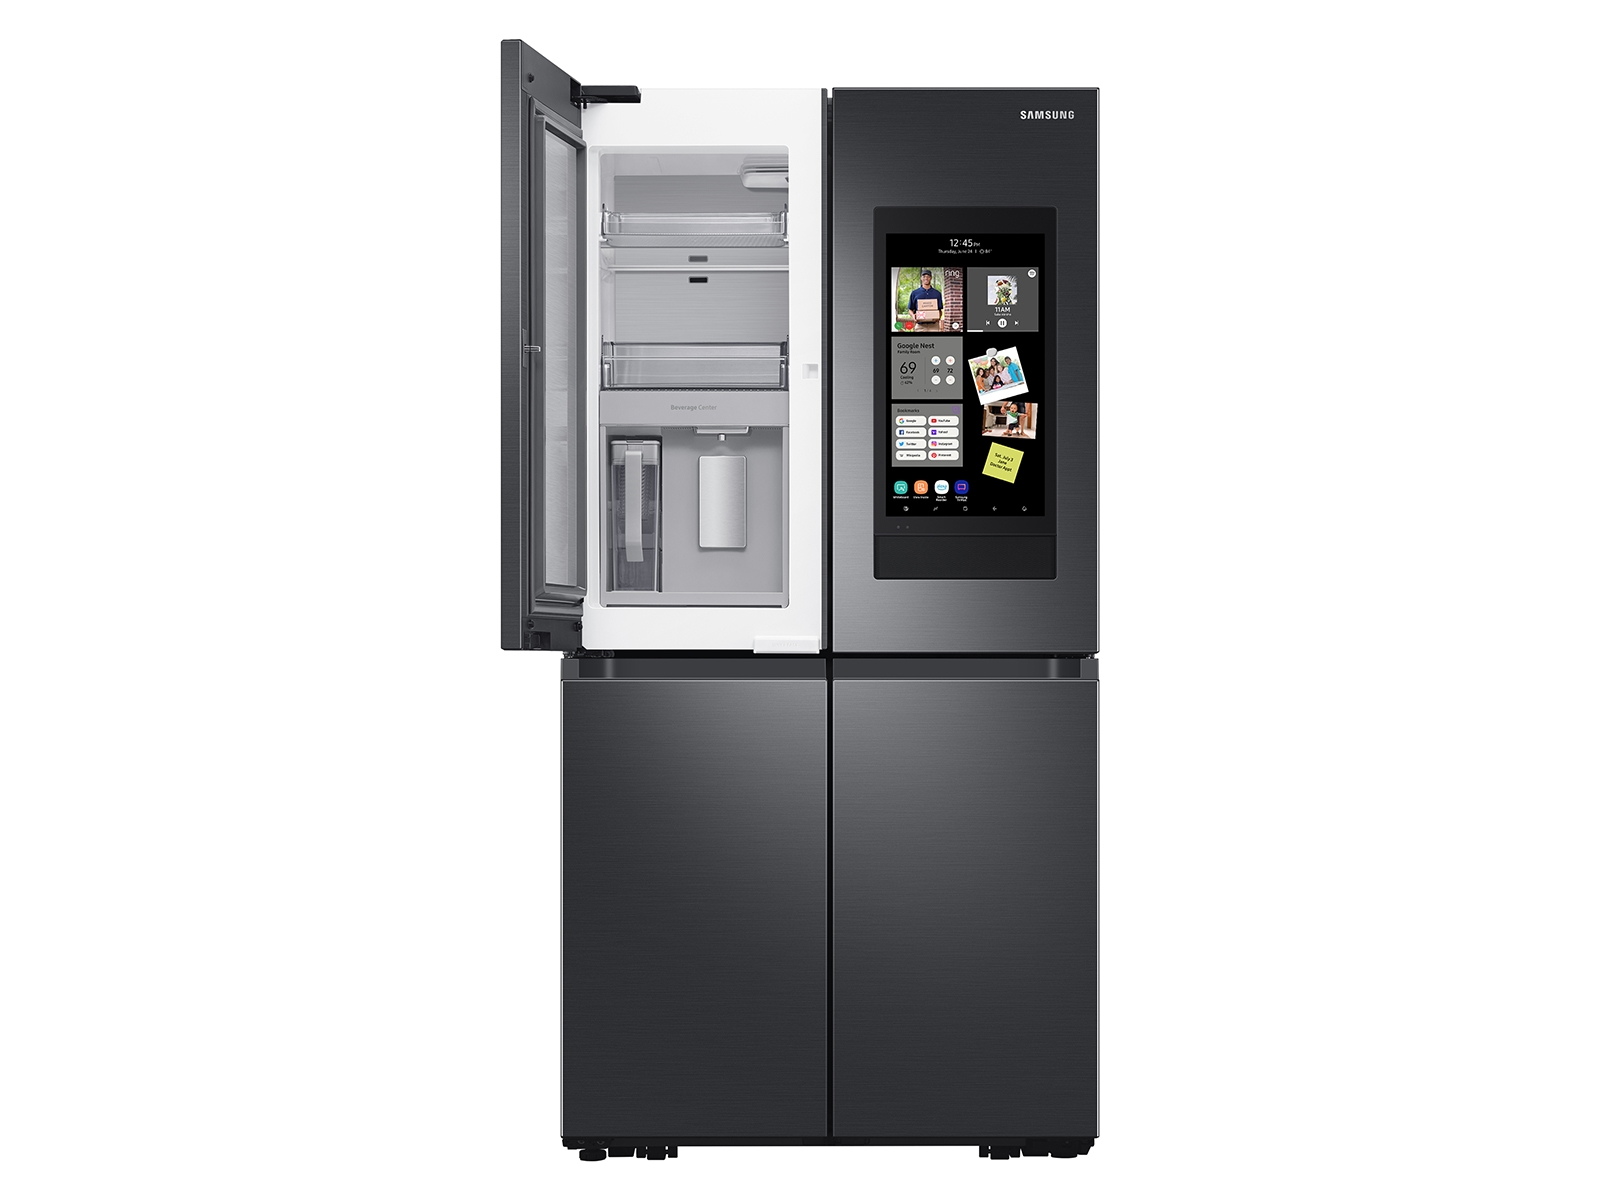 Review: Living with Samsung's Family Hub smart fridge